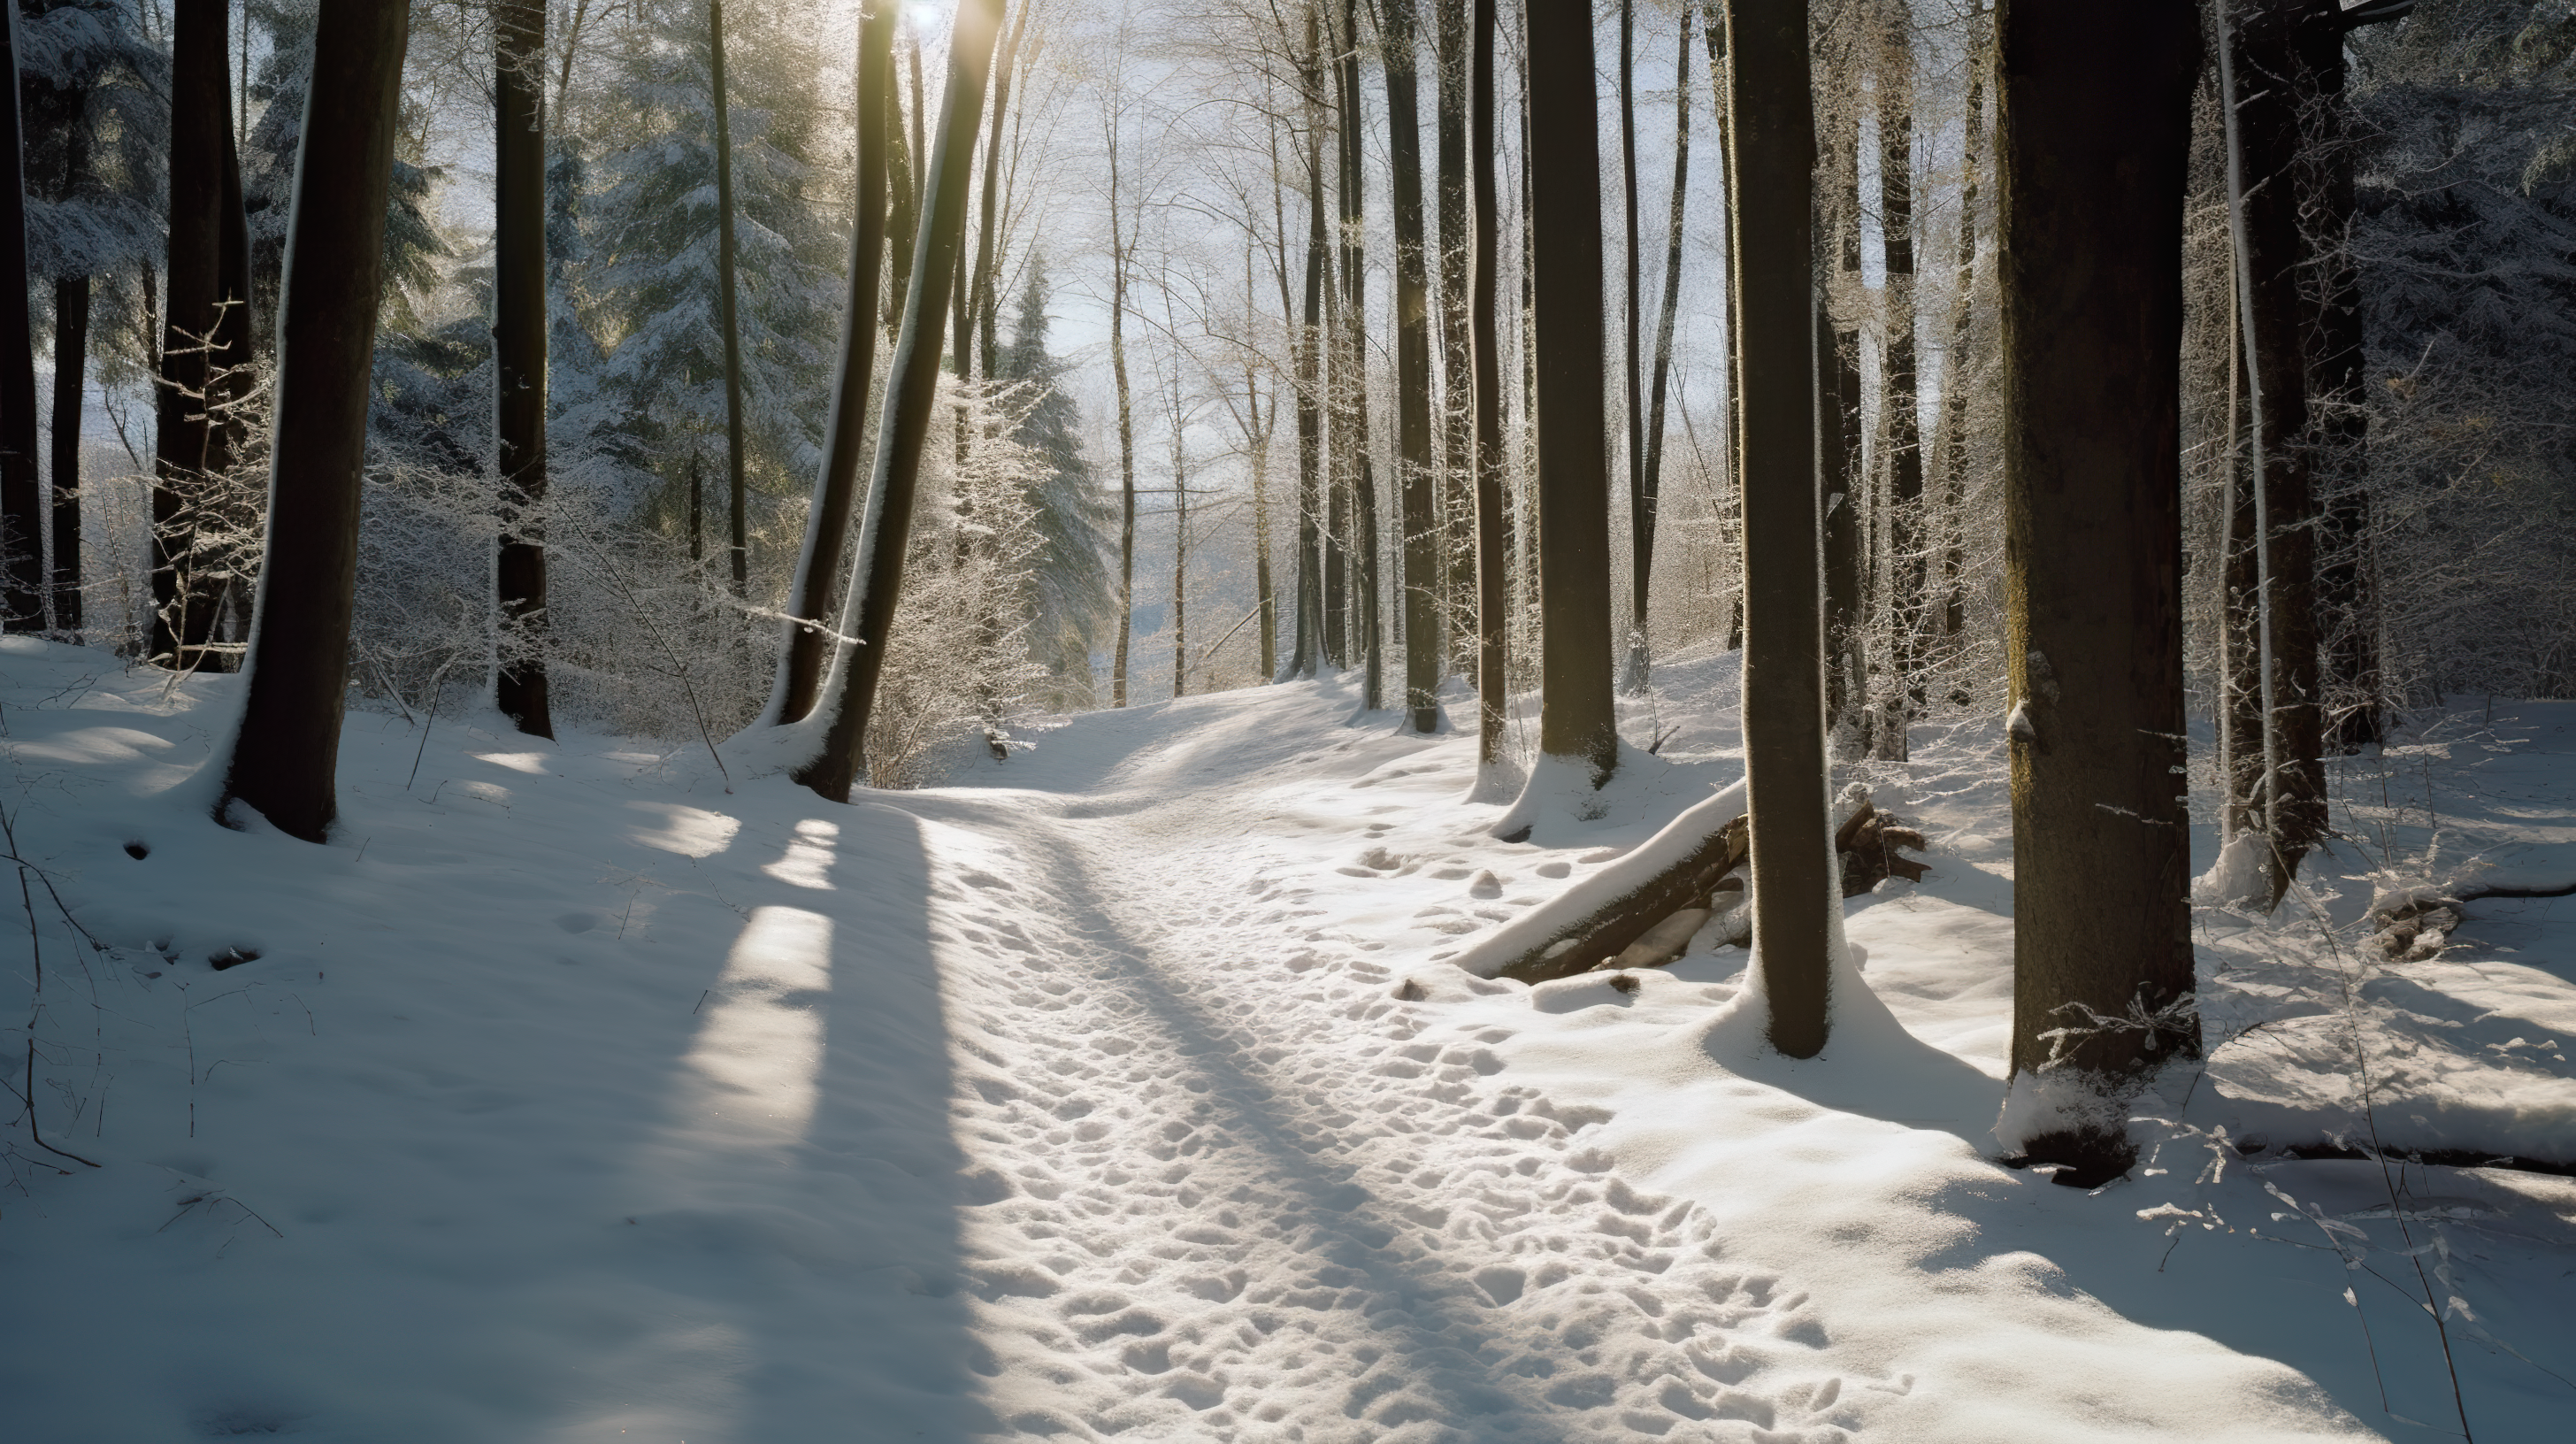 sunny path through a snowy forest